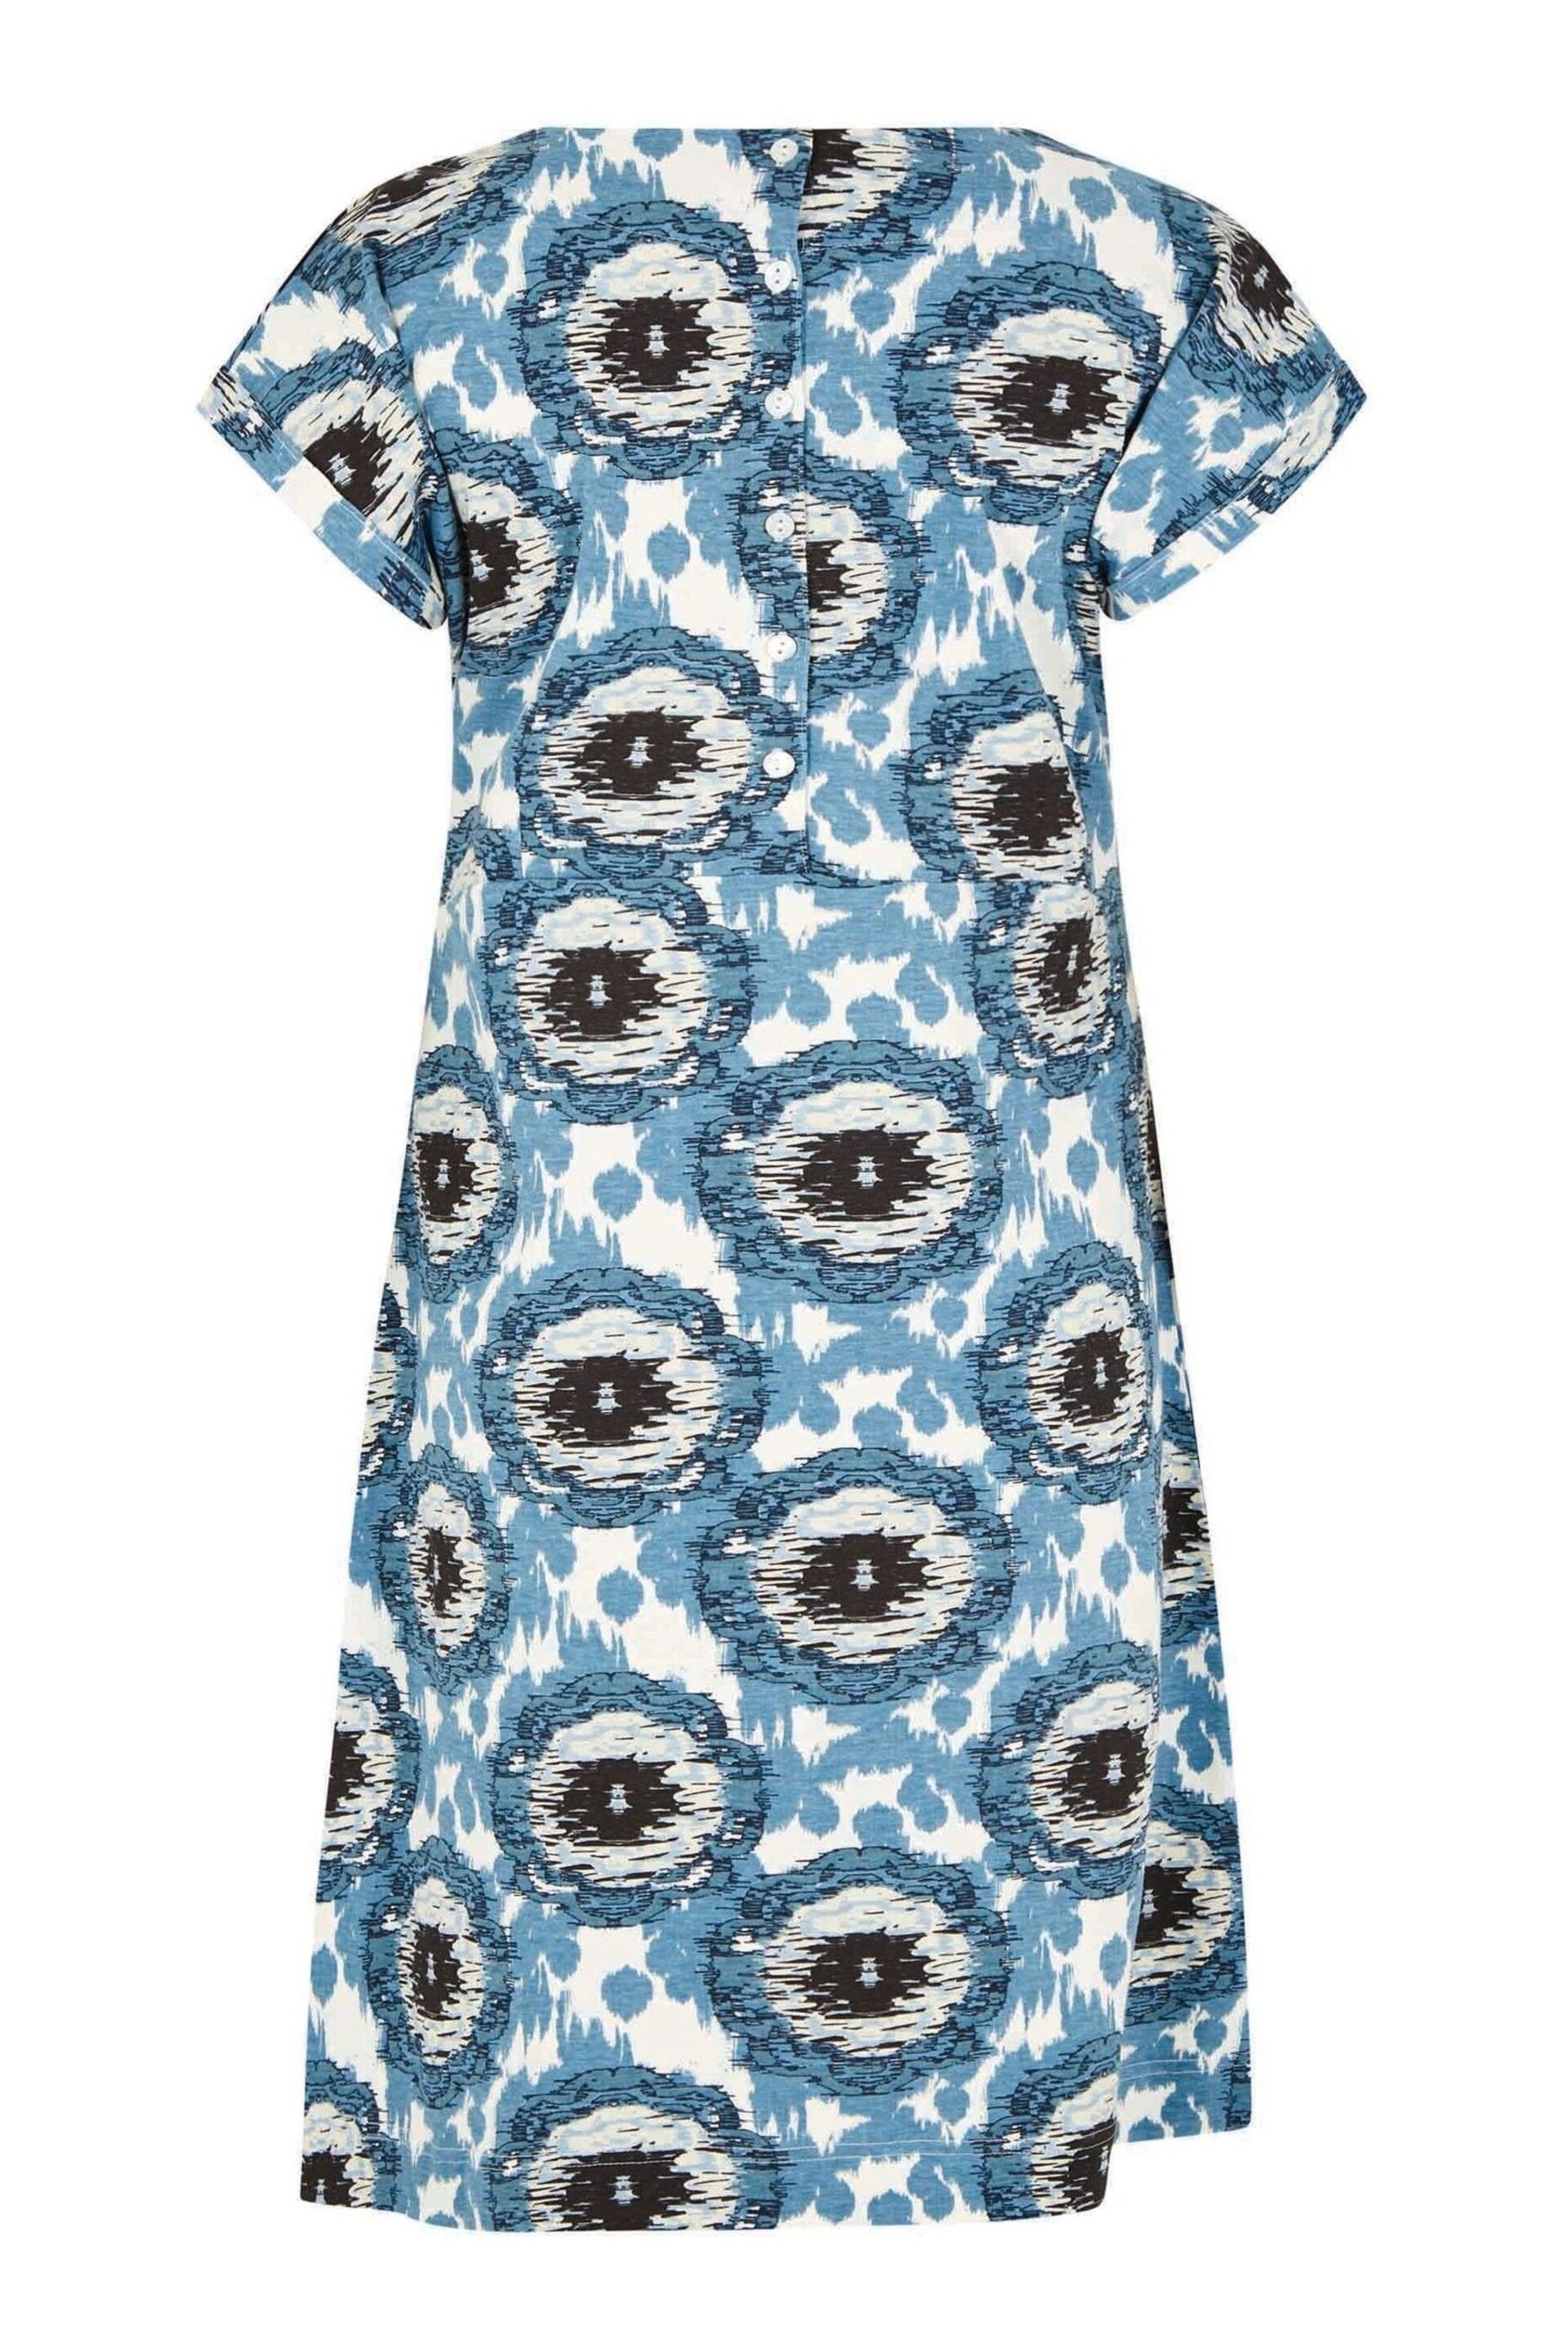 Weird Fish Tallahassee Organic Printed Jersey Dress - Image 2 of 7